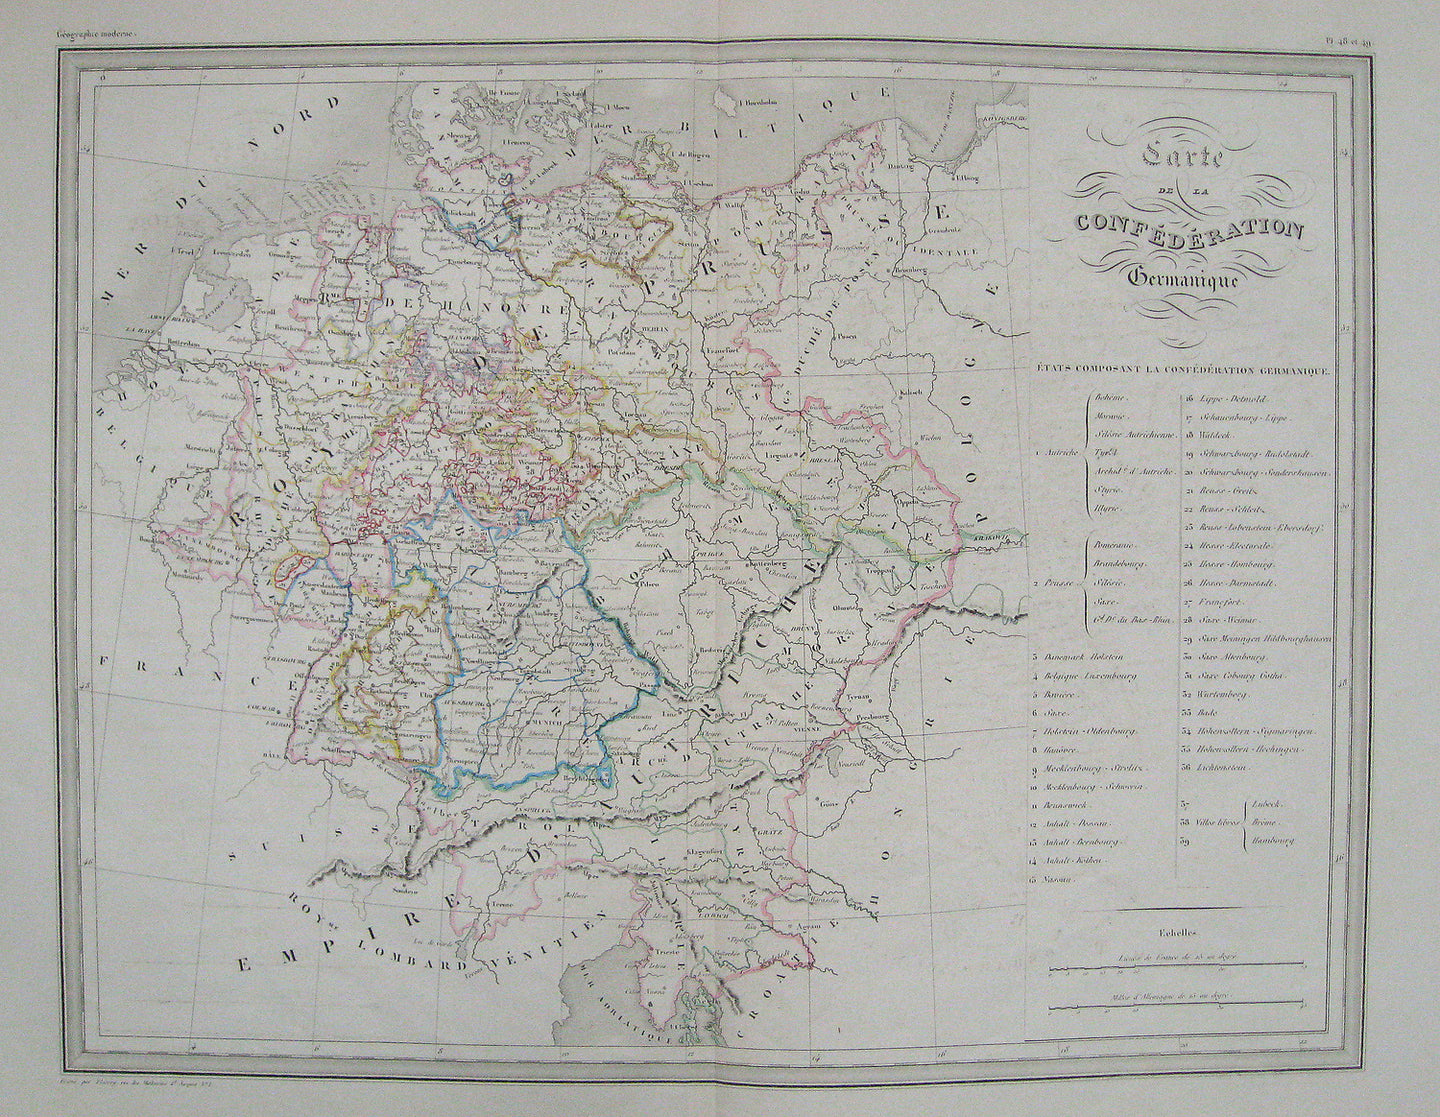 Antique-Hand-Colored-Map-Carte-de-la-Confederation-Germanique---Germany-Germany--1842-Malte-Brun-Maps-Of-Antiquity